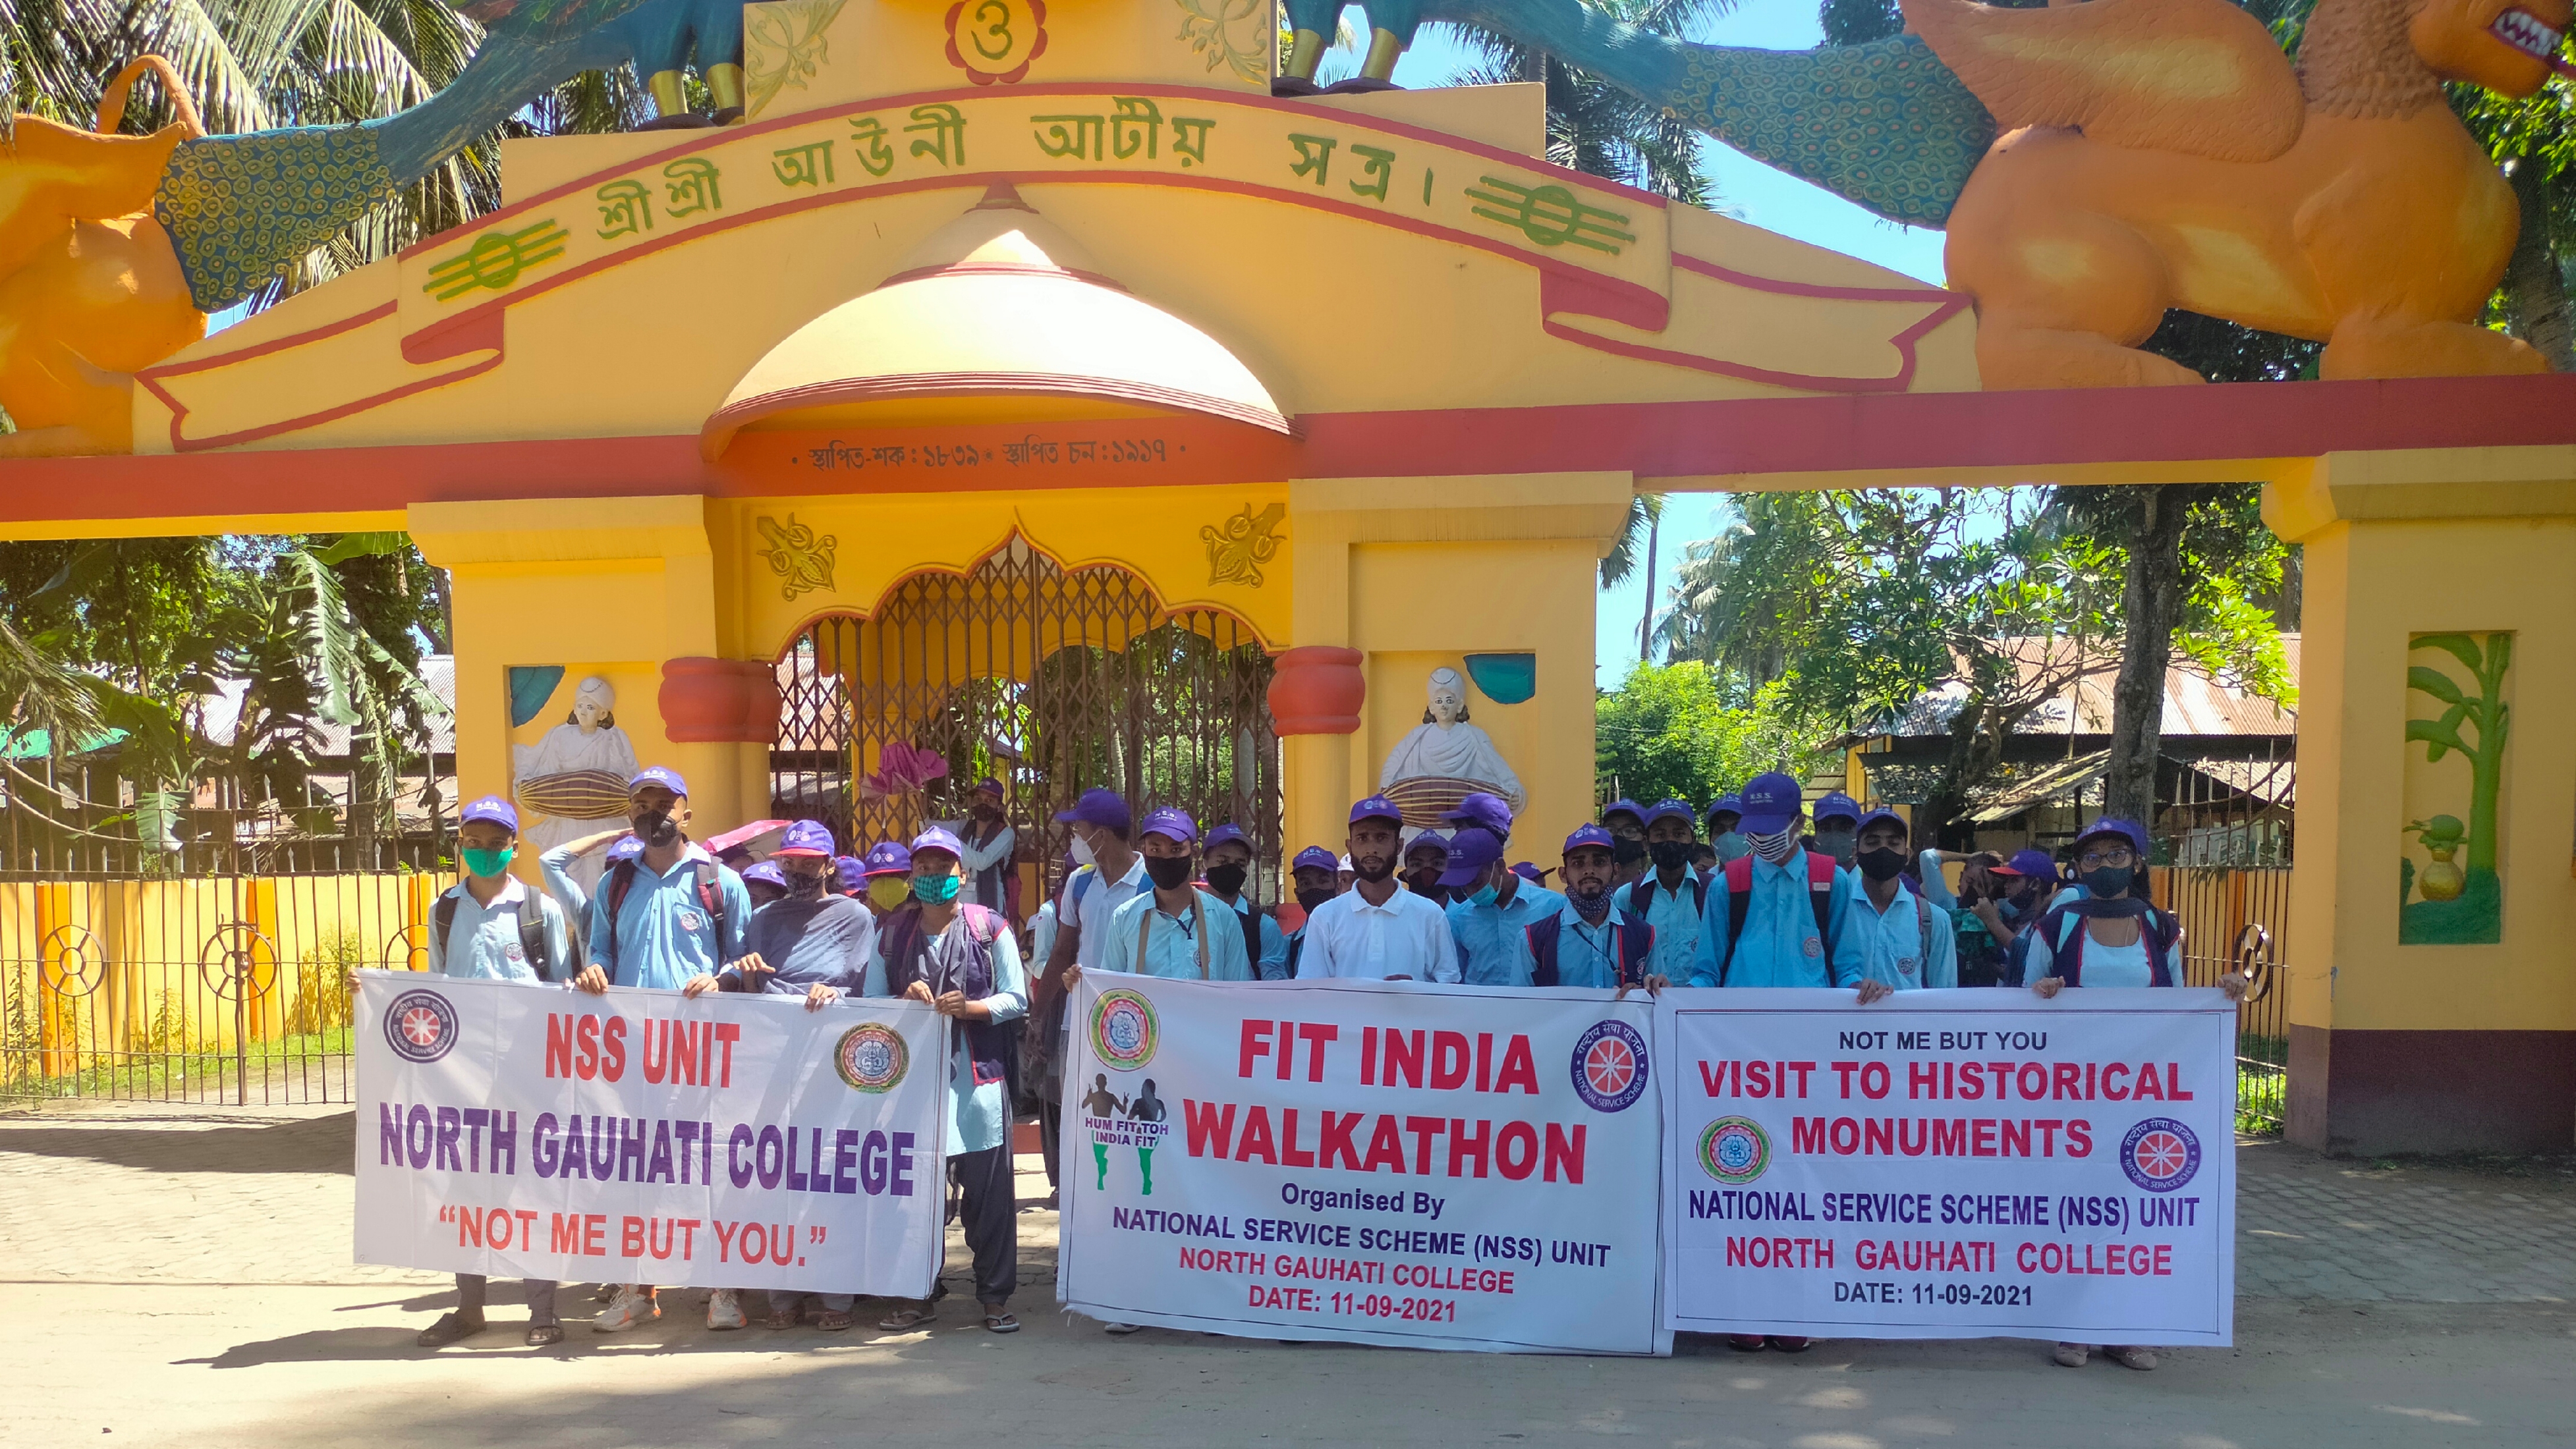 Fit India Walkathon organized by National Service Scheme (NSS) unit, North Gauhati College